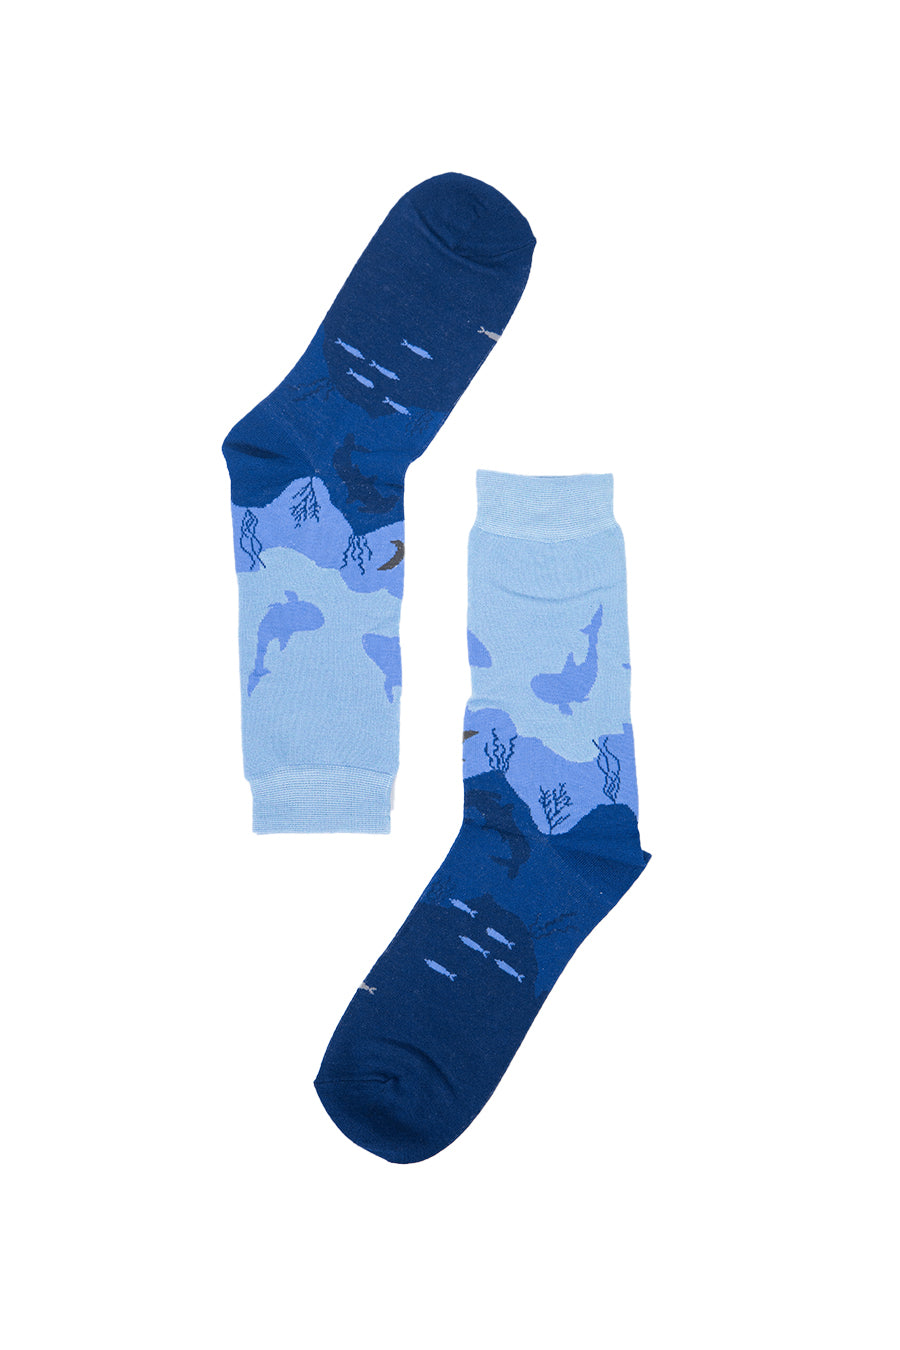 blue dress socks with fish, marine life and sharks